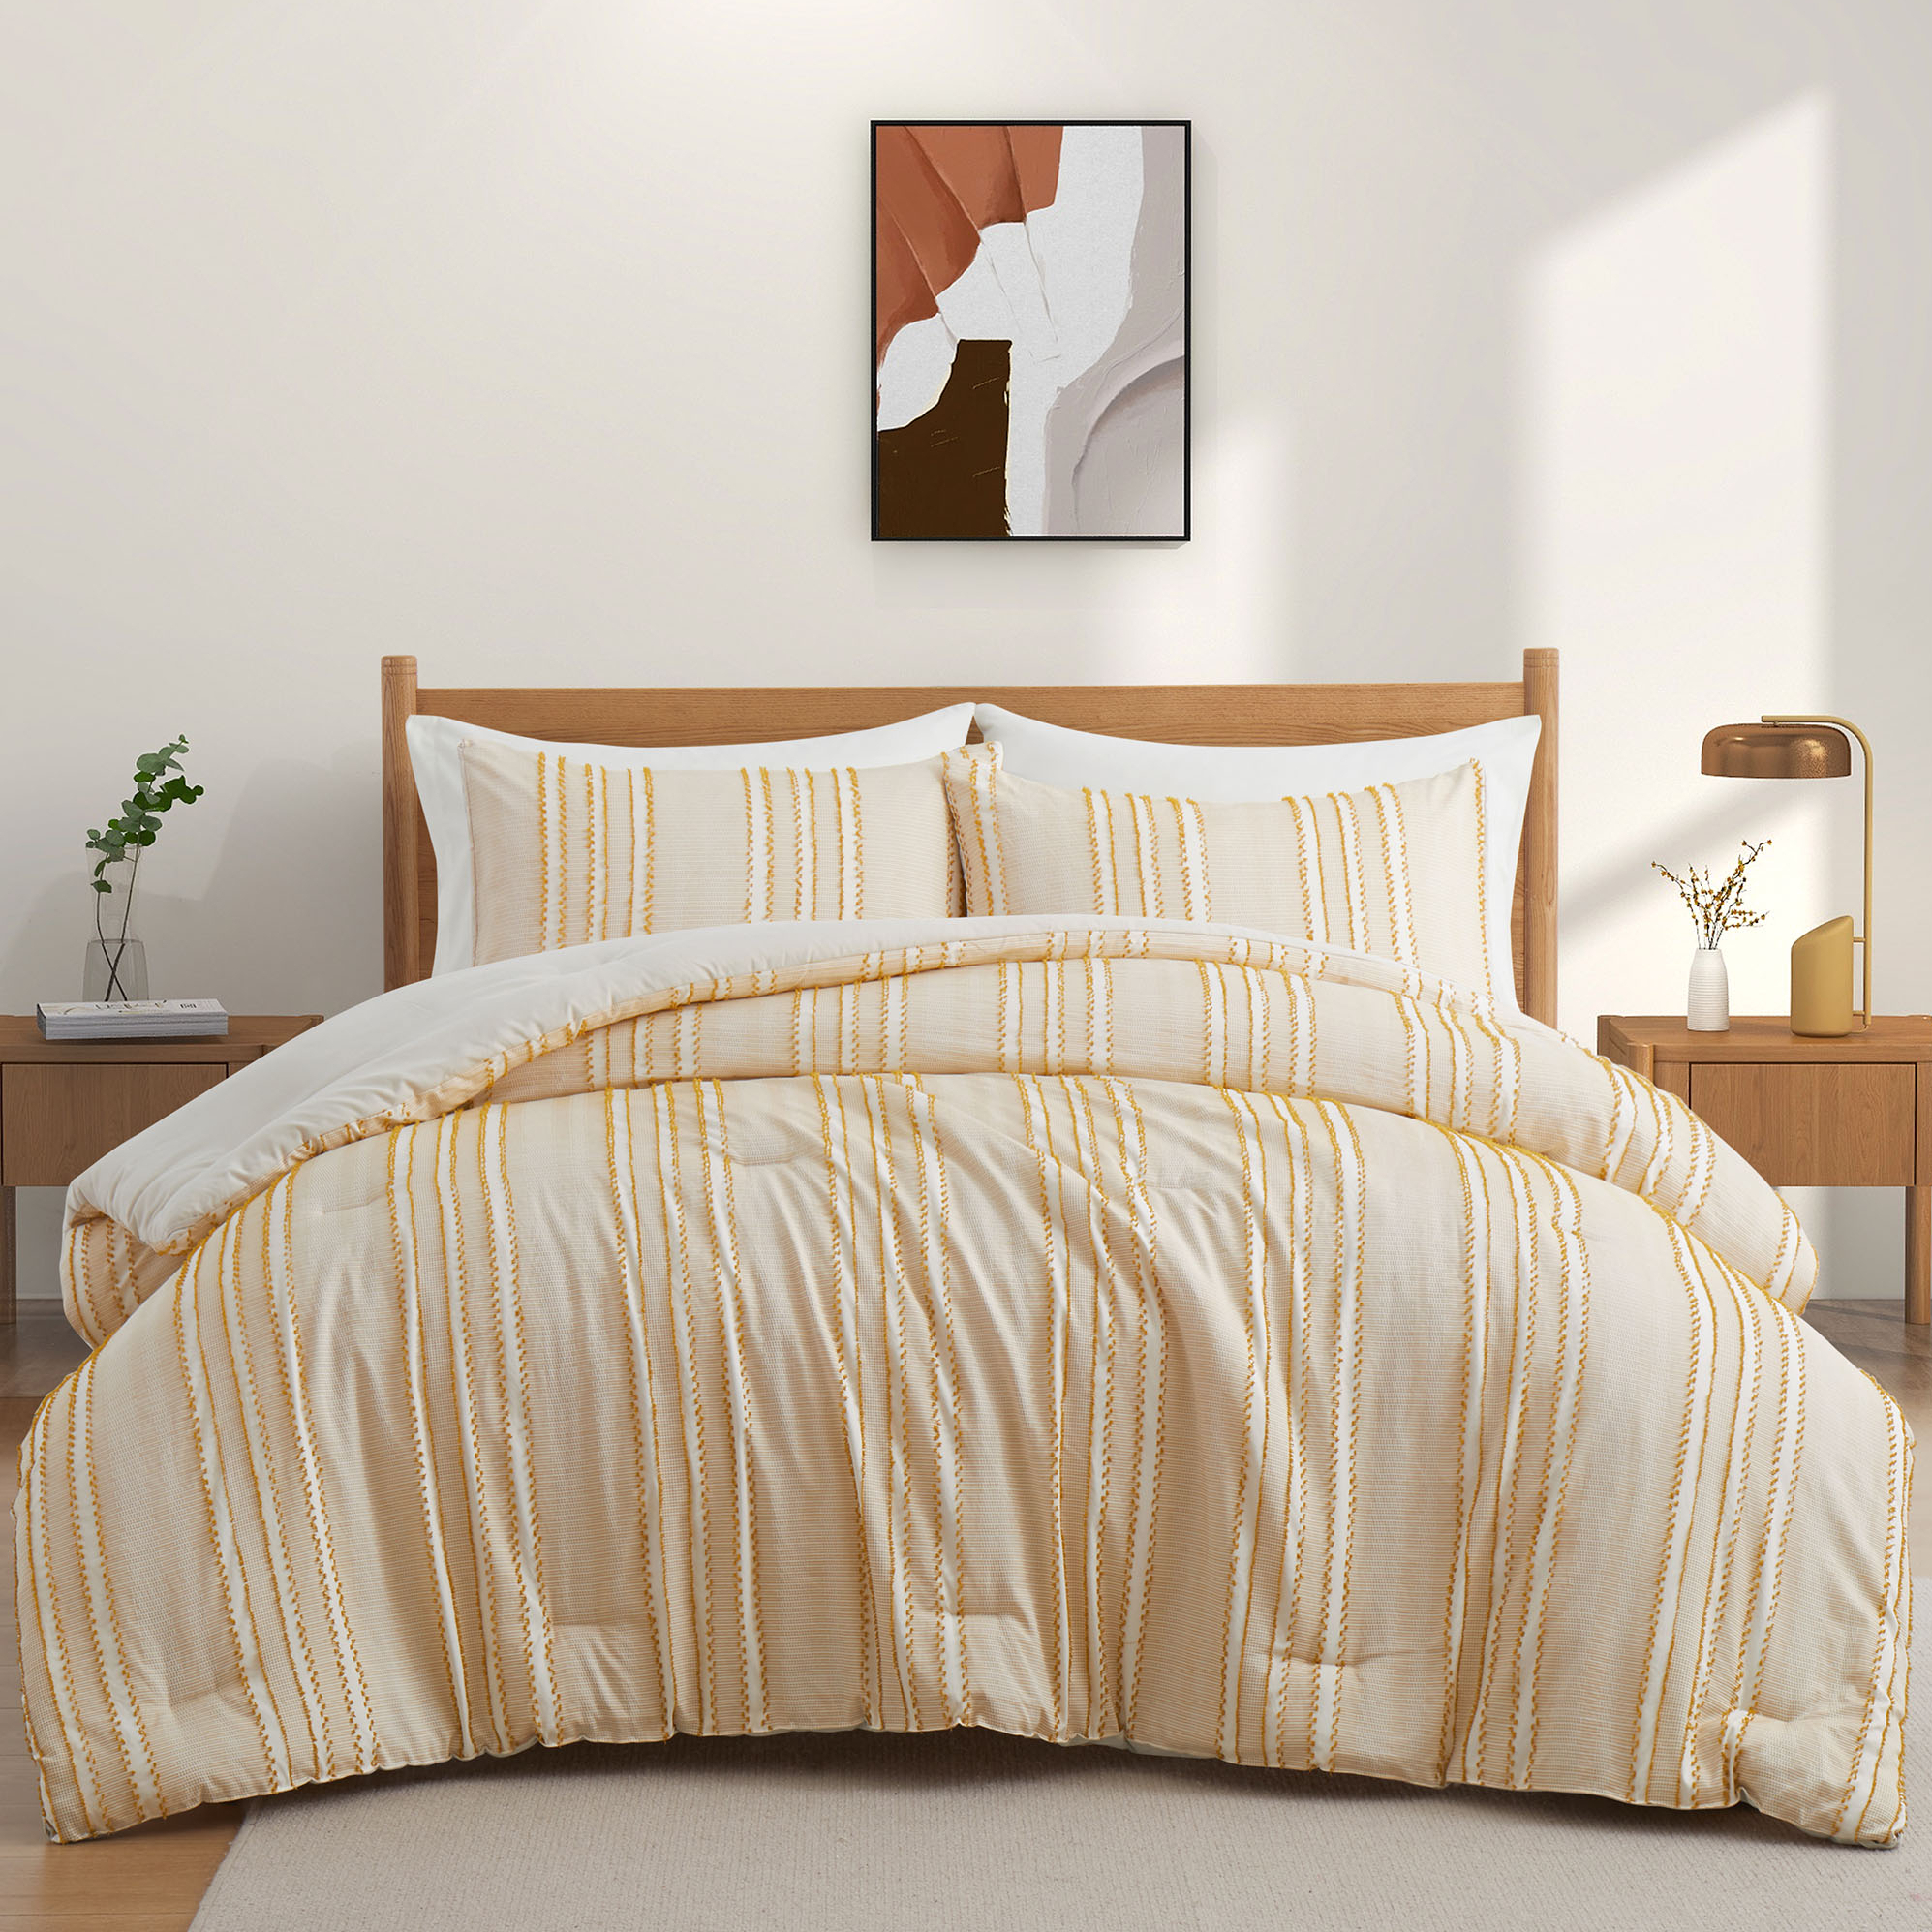 Premium 3 Piece Soft Microfiber Clipped All Season Comforter Set - Cozy Bedding Ensemble - Full/Queen